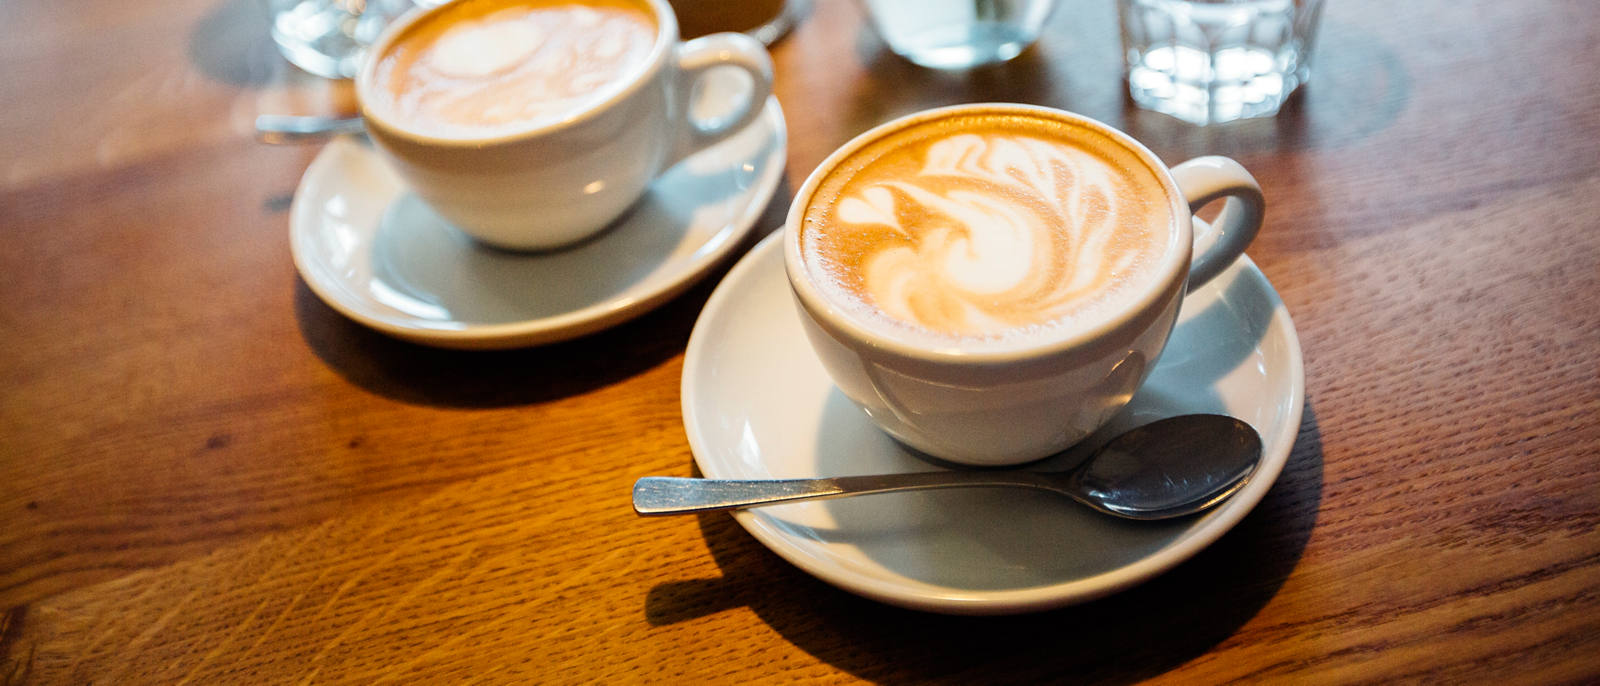 Myth 1: does coffee dehydrate the body?